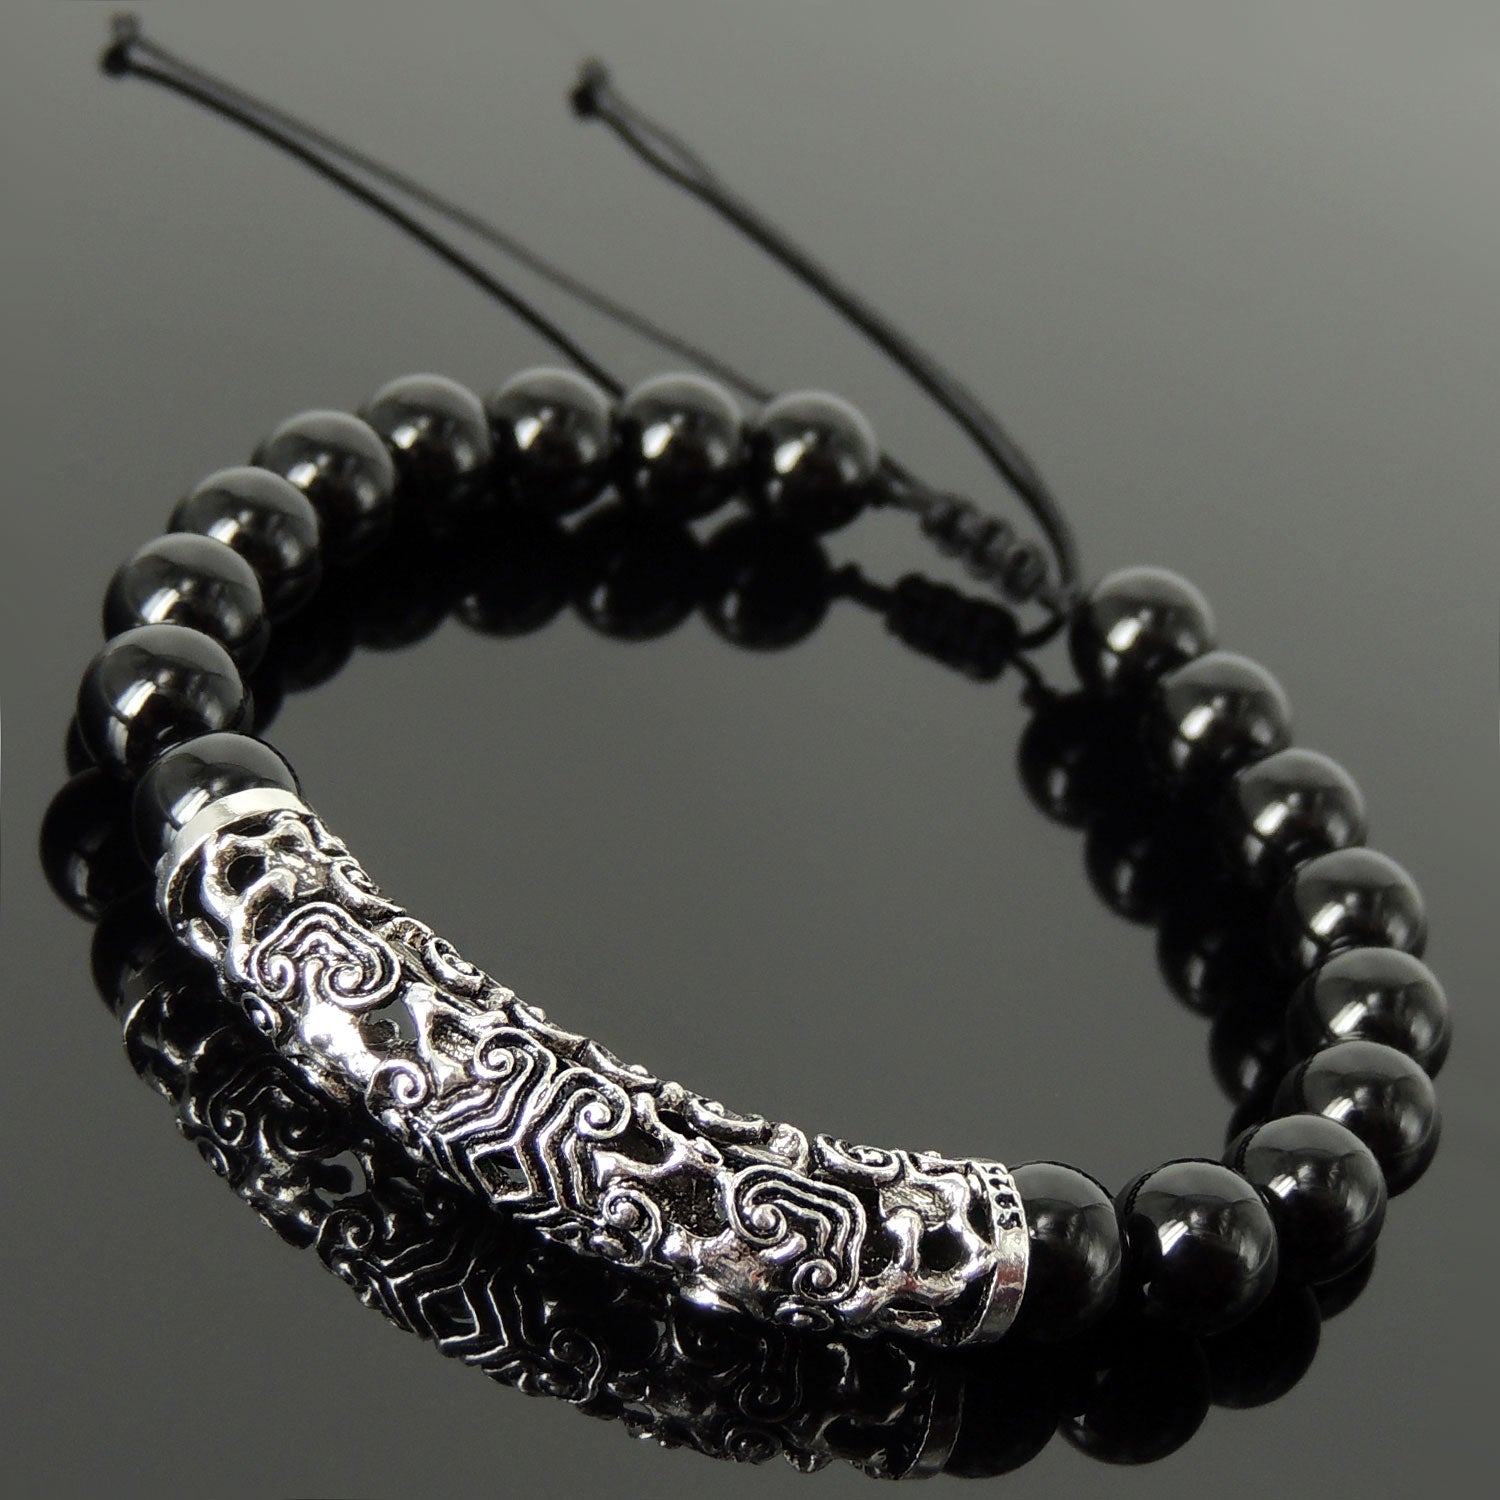 Handmade Adjustable Braided Bracelet - Men's Women's Custom Jewelry, Protection with 8mm Bright Black Onyx Healing Gemstones, Genuine S925 Sterling Silver Japanese Woodwork Charm BR1795